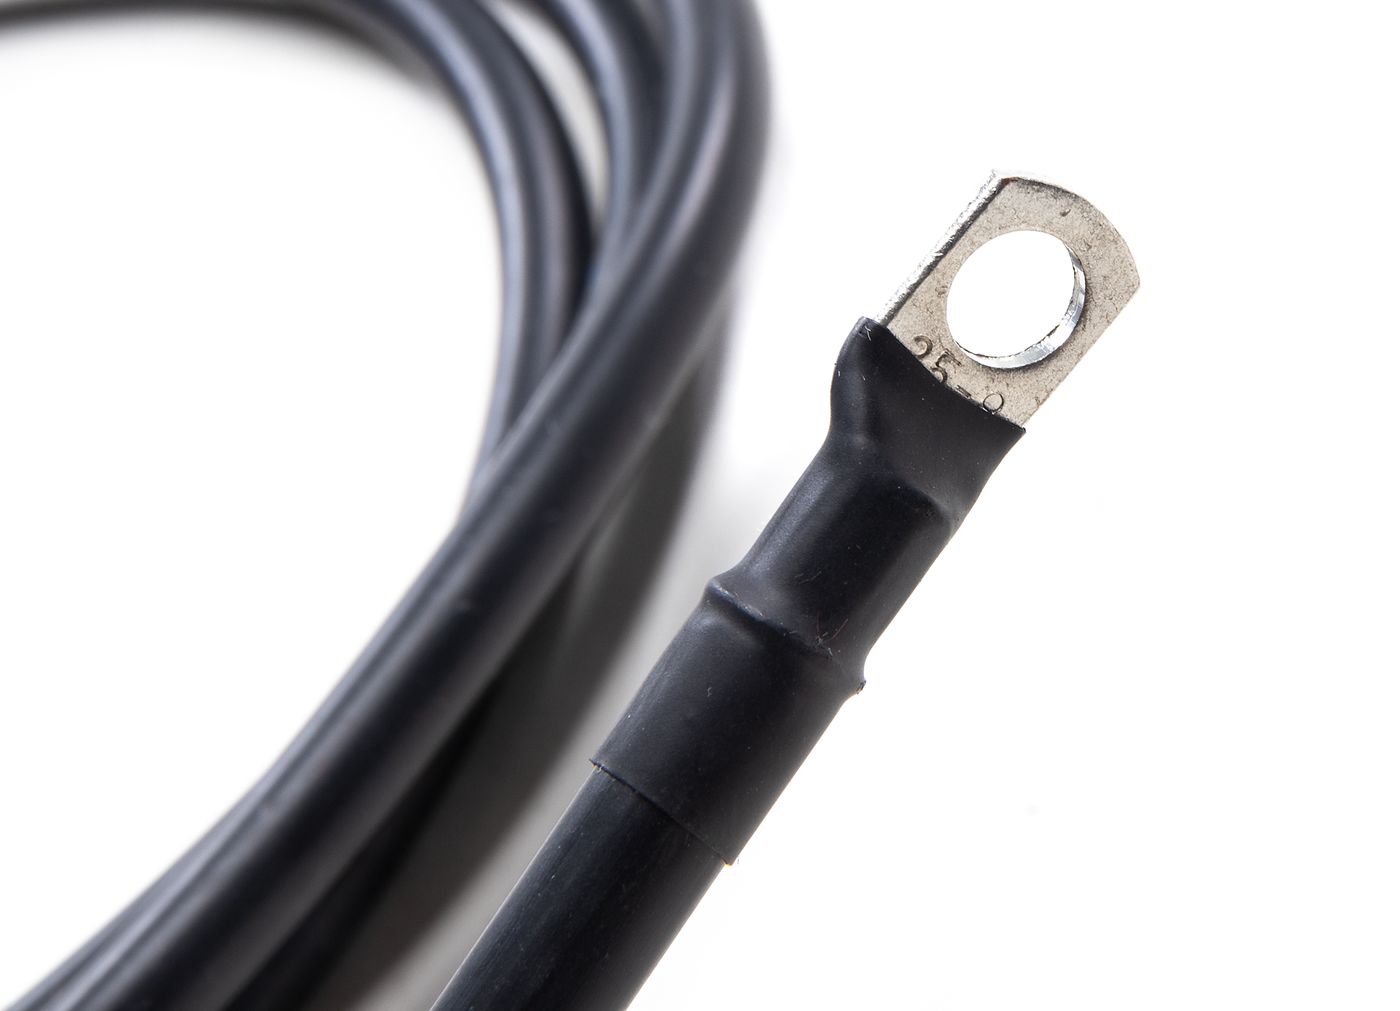 Batteriekabel
Battery cable
Câble de batterie
Kabel akumulatora